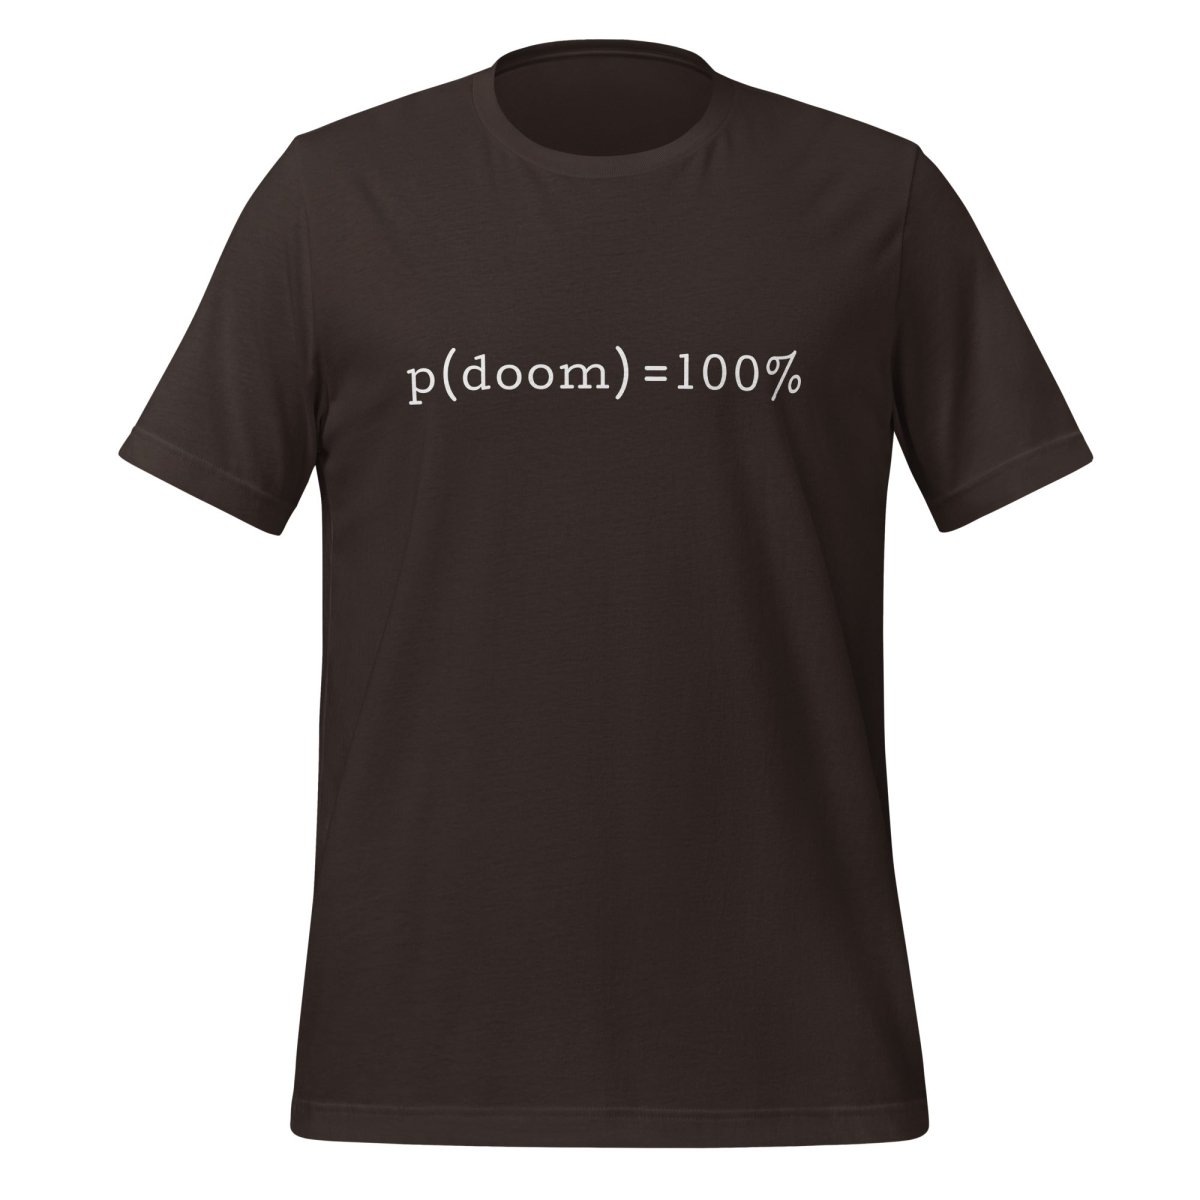 p(doom) = 100% T - Shirt (unisex) - Brown - AI Store